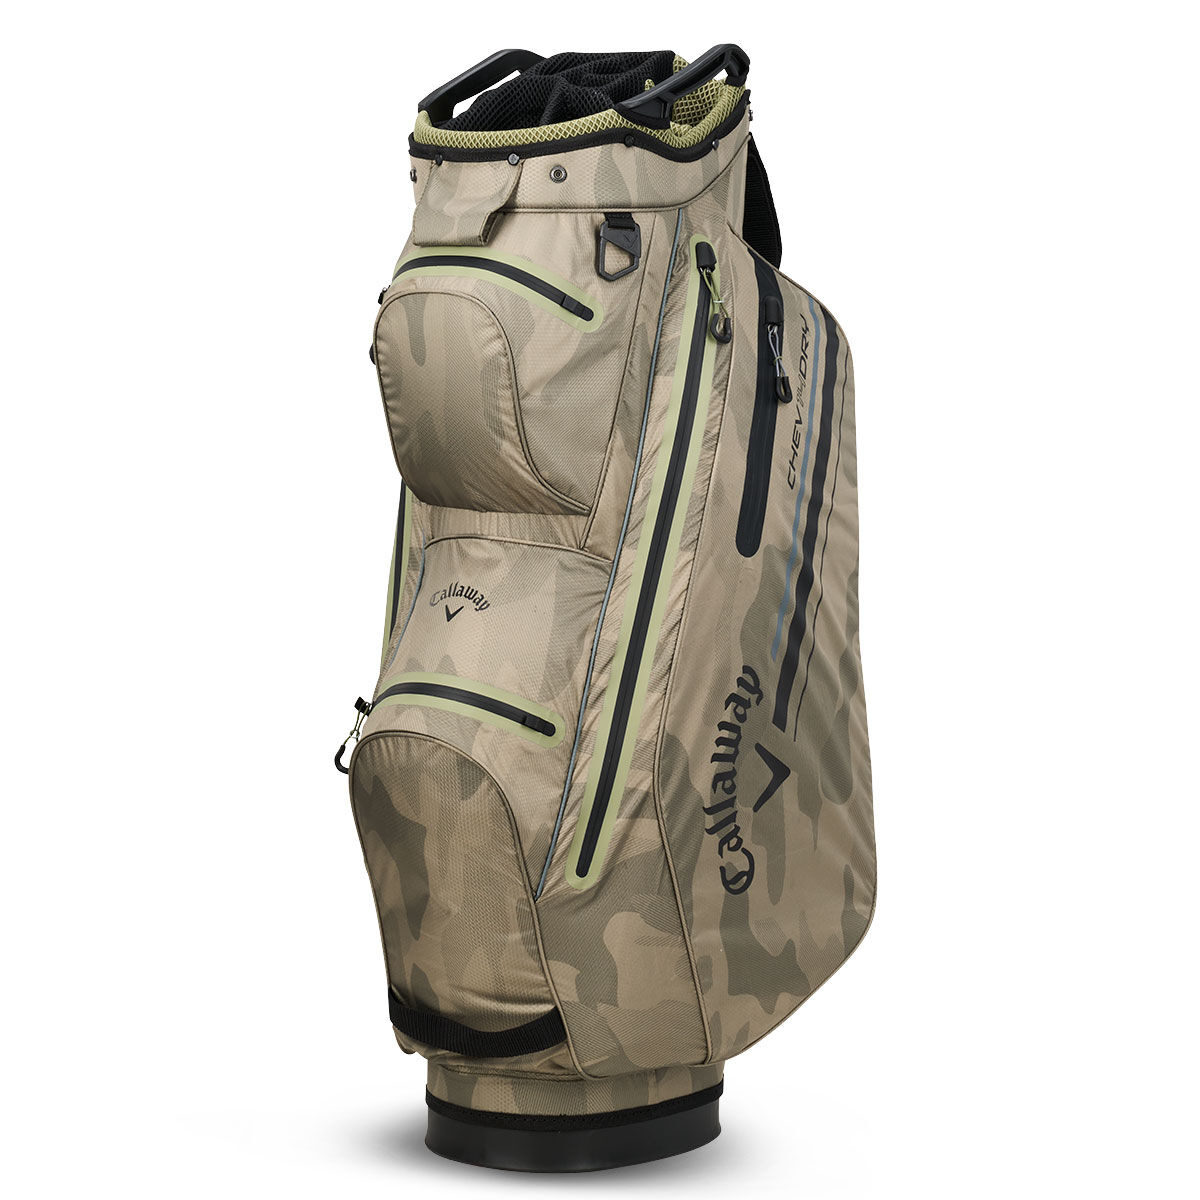 Callaway Chev Dry 14 Golf Cart Bag, Olive camo, One Size | American Golf von Callaway Golf